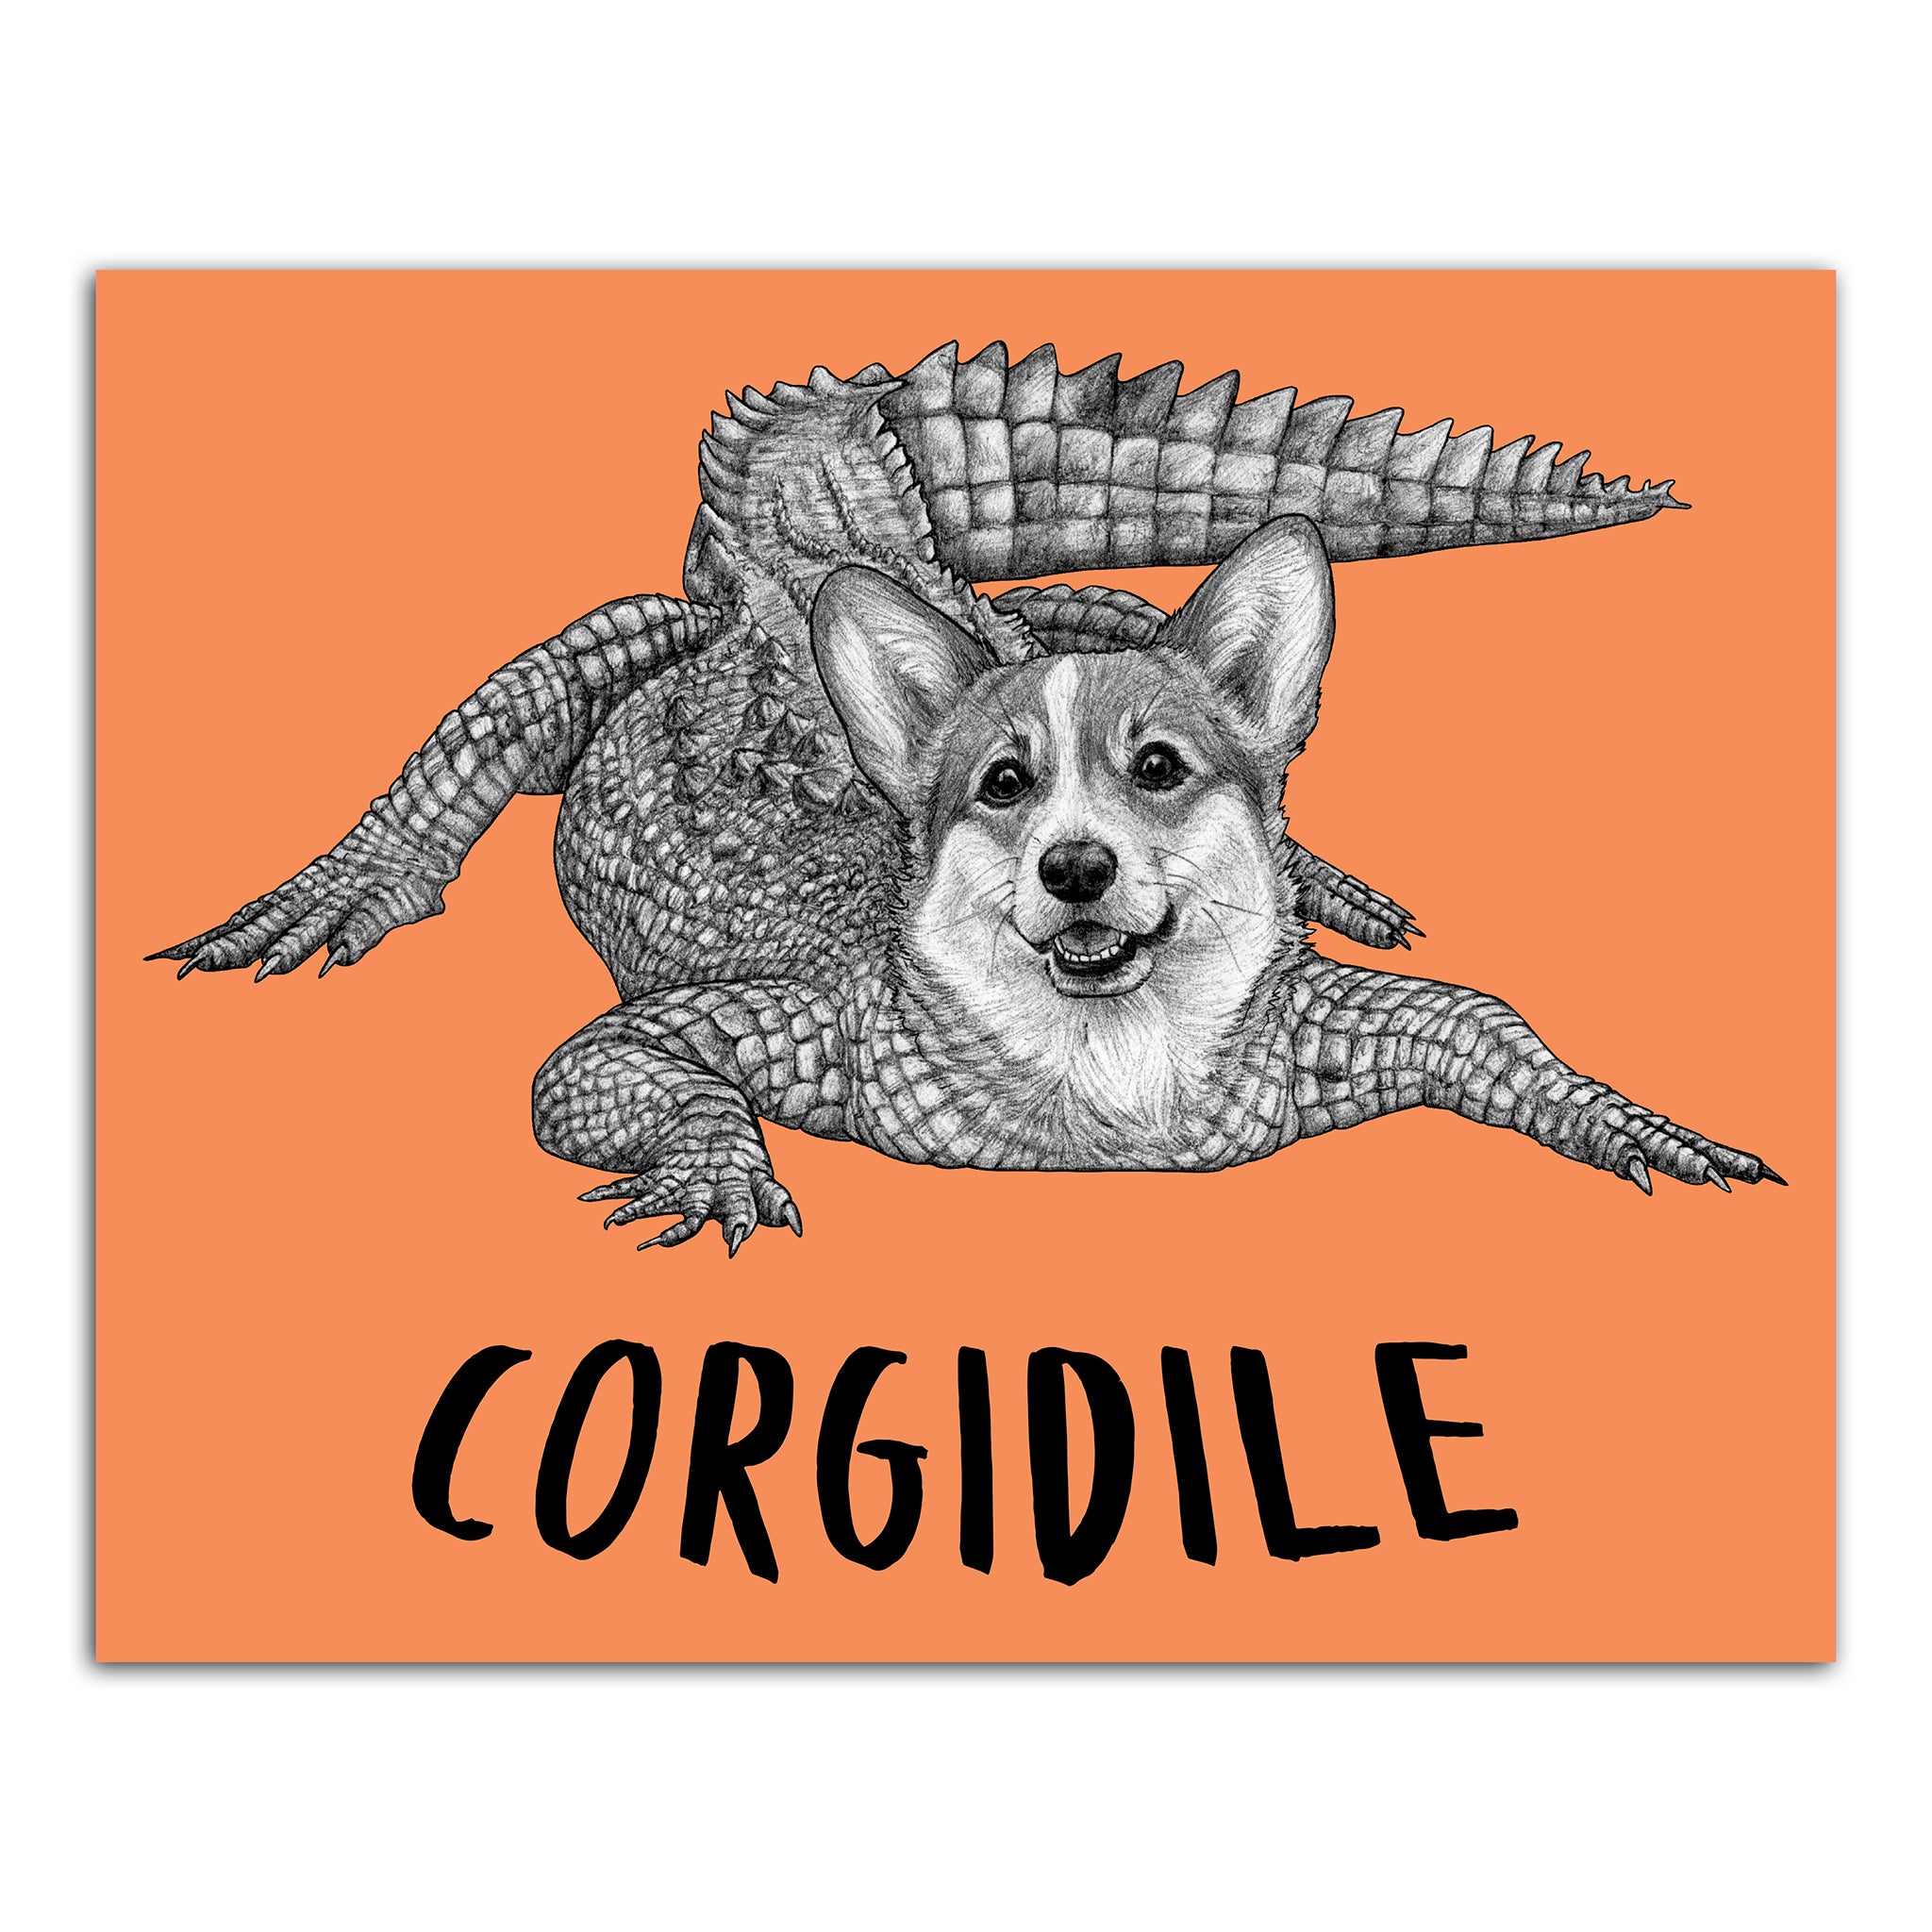 Corgidile | Corgi + Crocodile Hybrid Animal | 8x10" Color Print